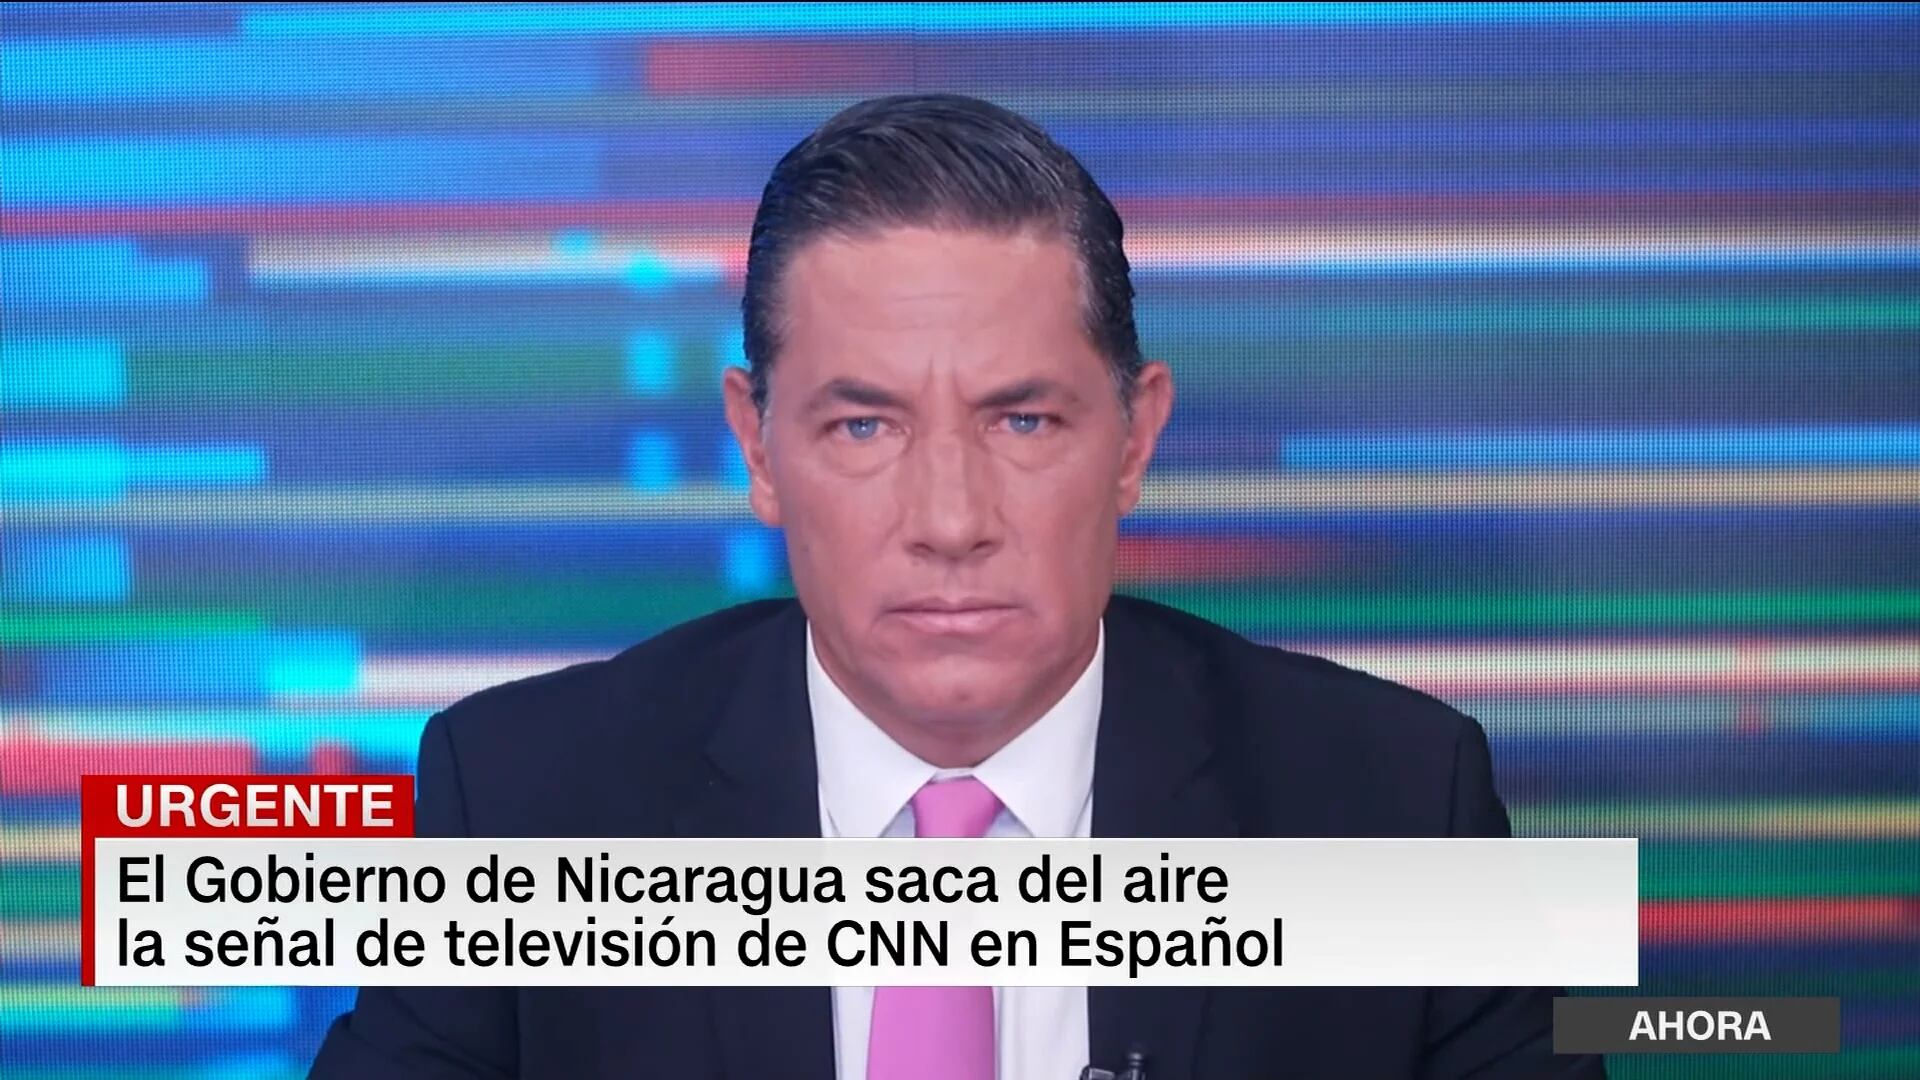 La dictadura de Daniel Ortega sacó del aire a la señal de CNN en Español en Nicaragua